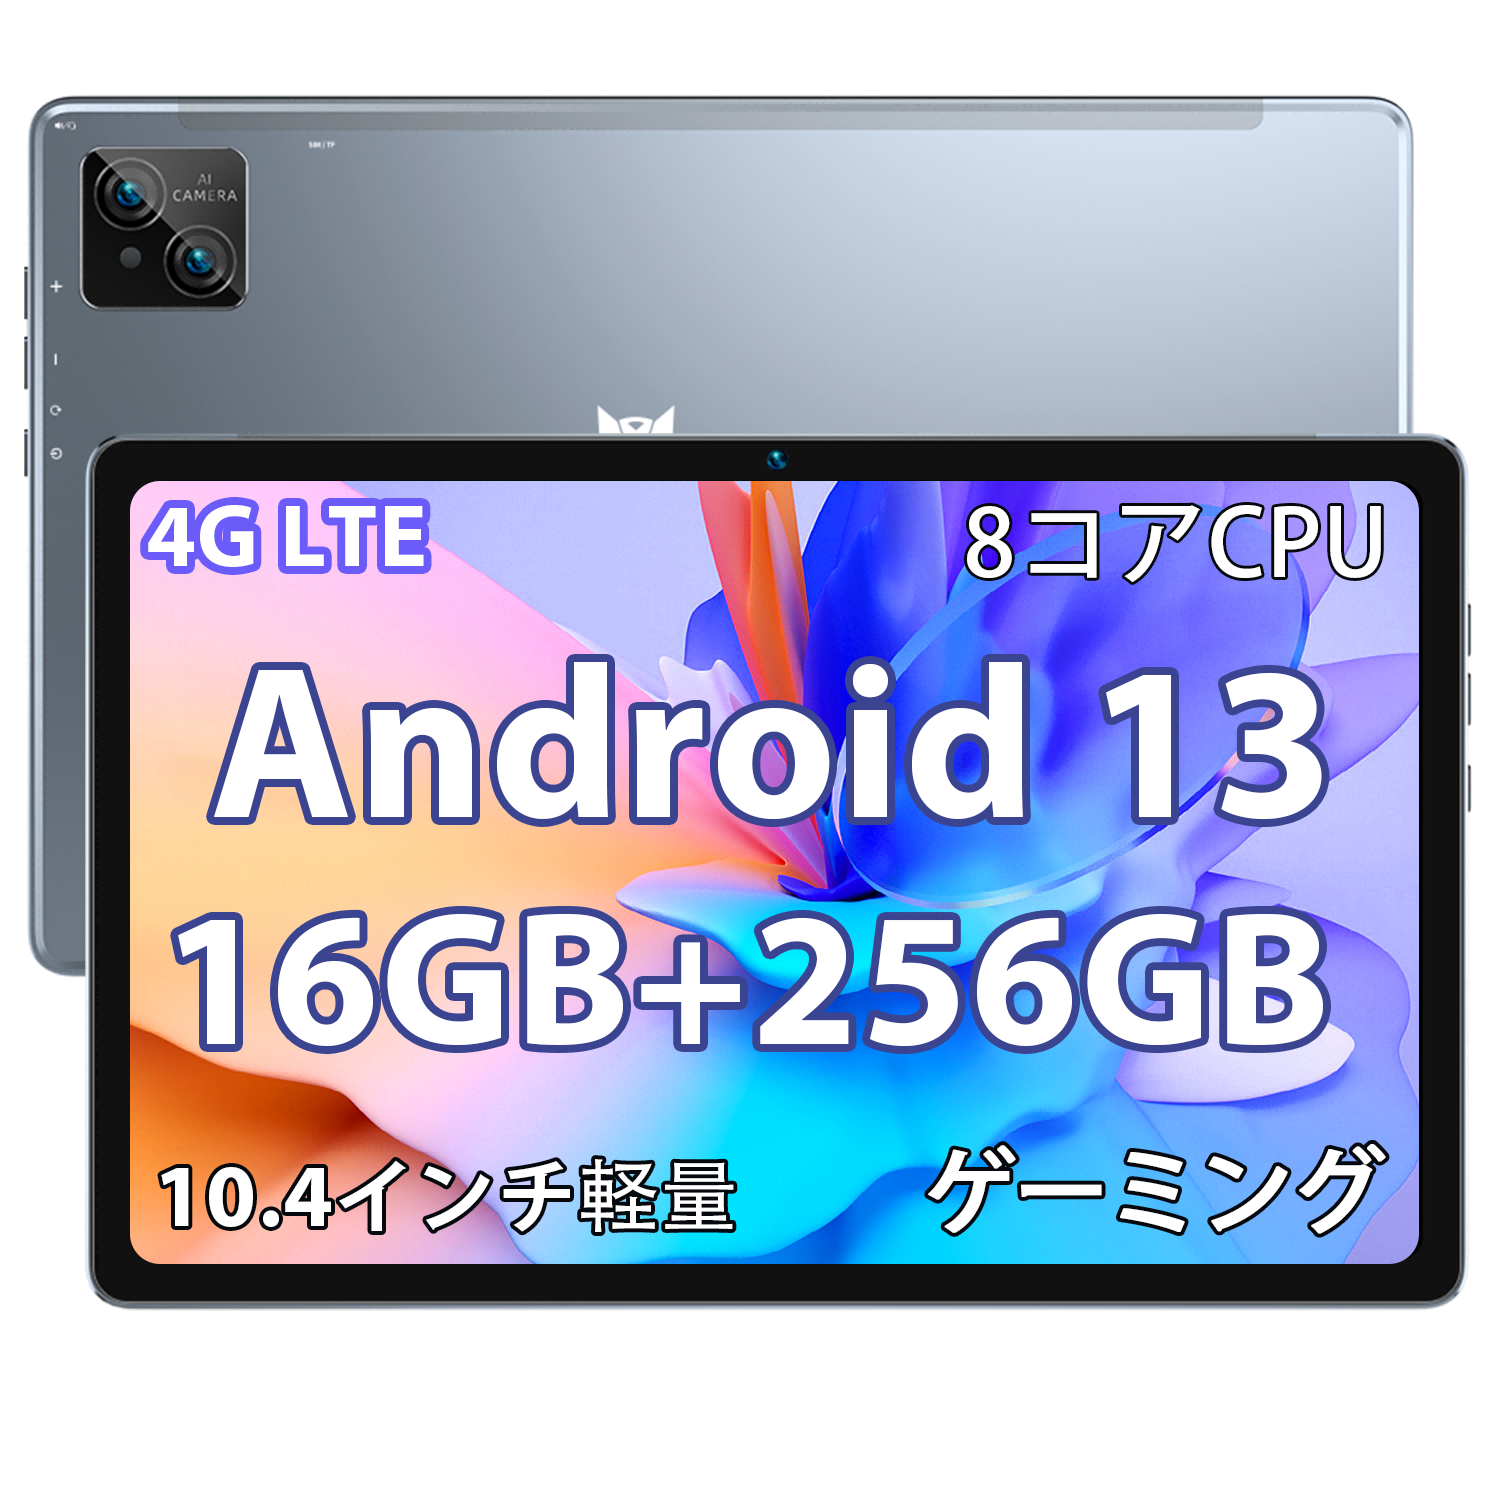 Prime早期割引】Android 13,16GB+256GB SIMフリー 10インチタブレット